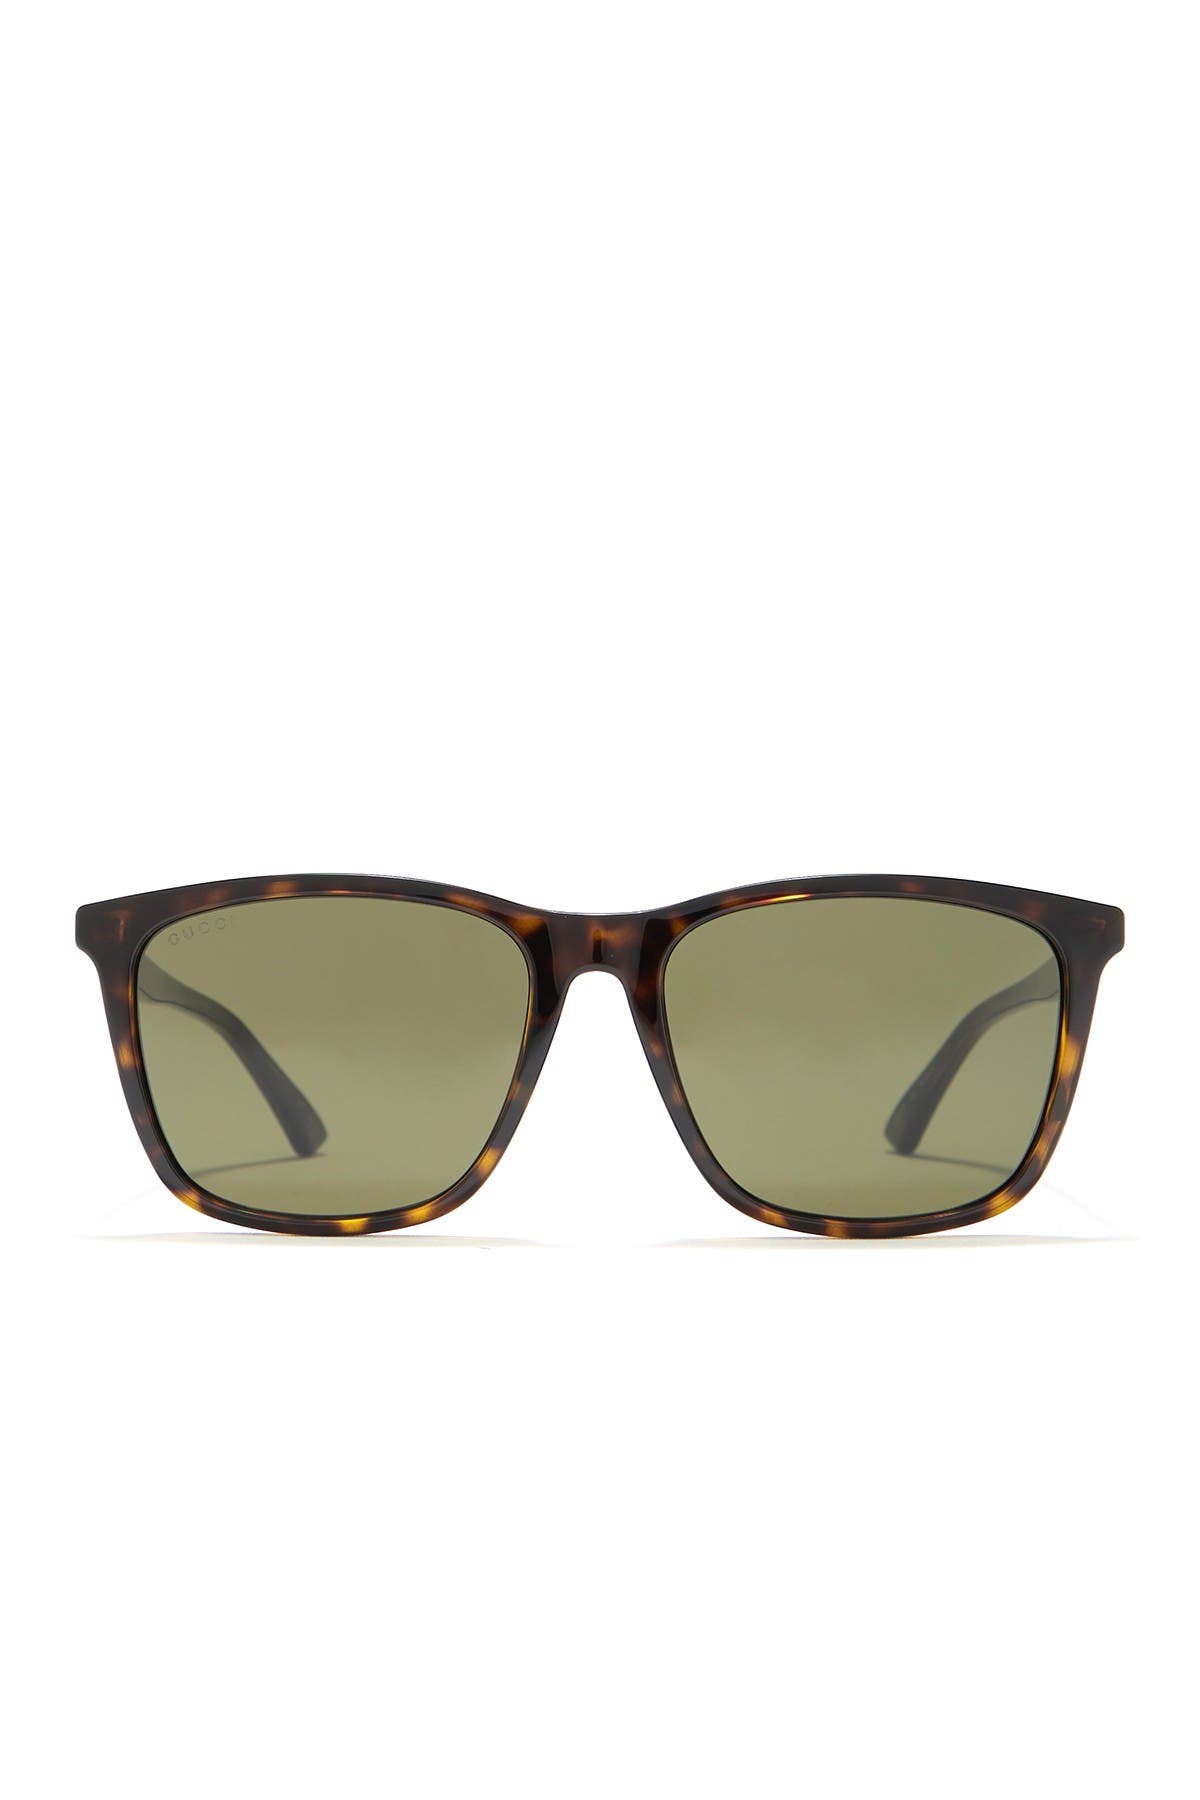 GUCCI | 58mm Square Sunglasses | Nordstrom Rack